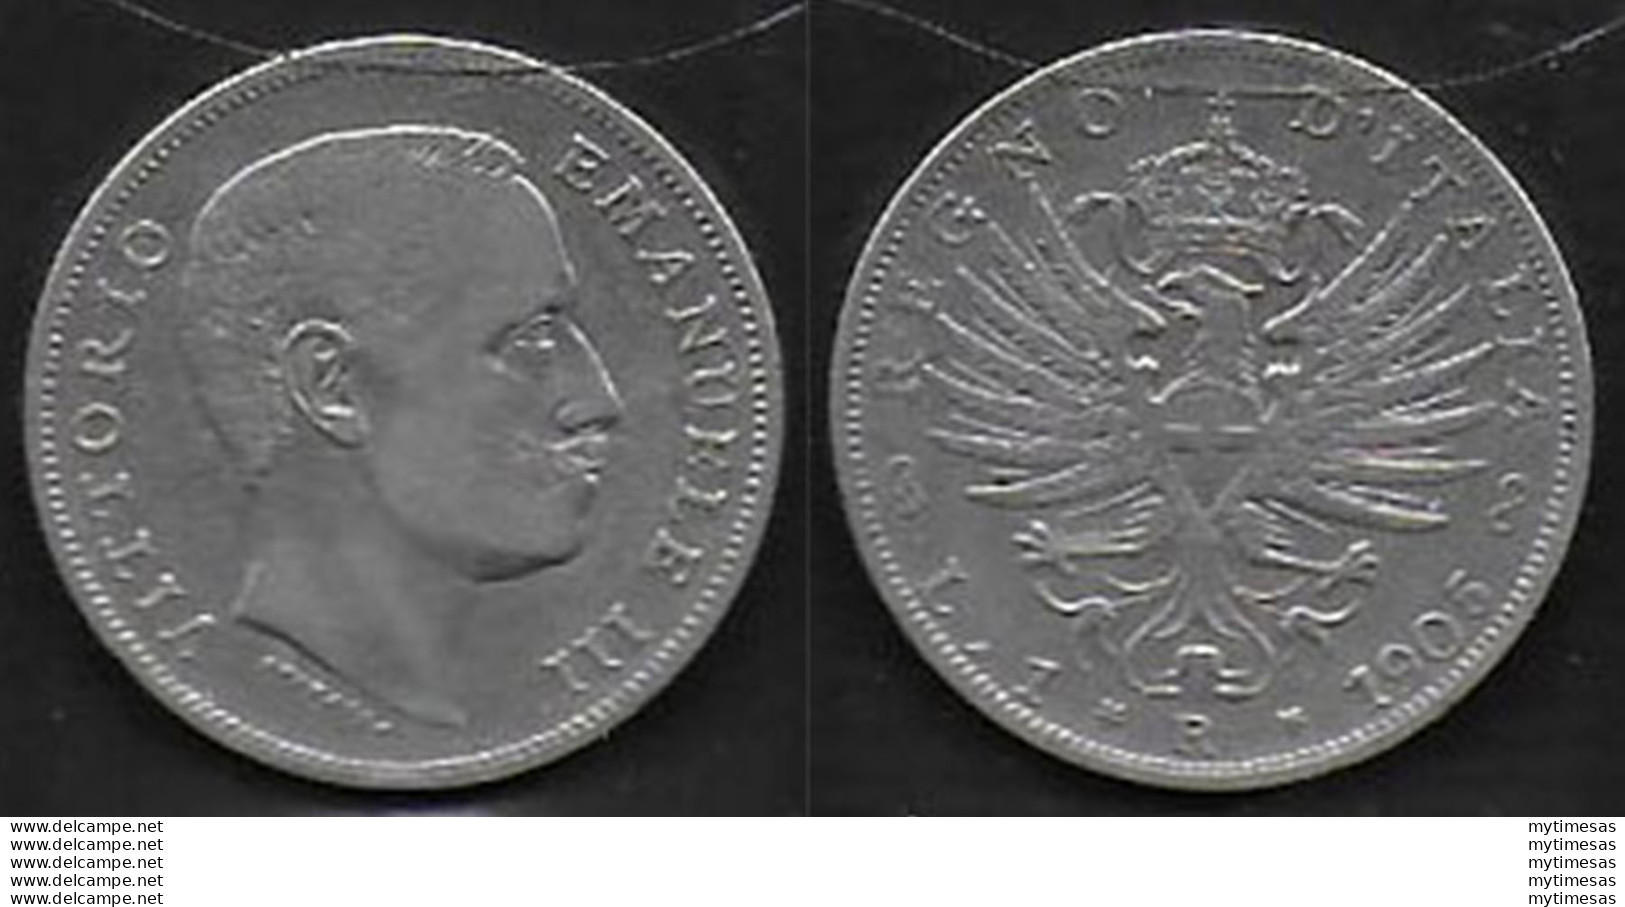 1905 Lire 1 QBB Aquila Sabauda Argento - 1900-1946 : Vittorio Emanuele III & Umberto II